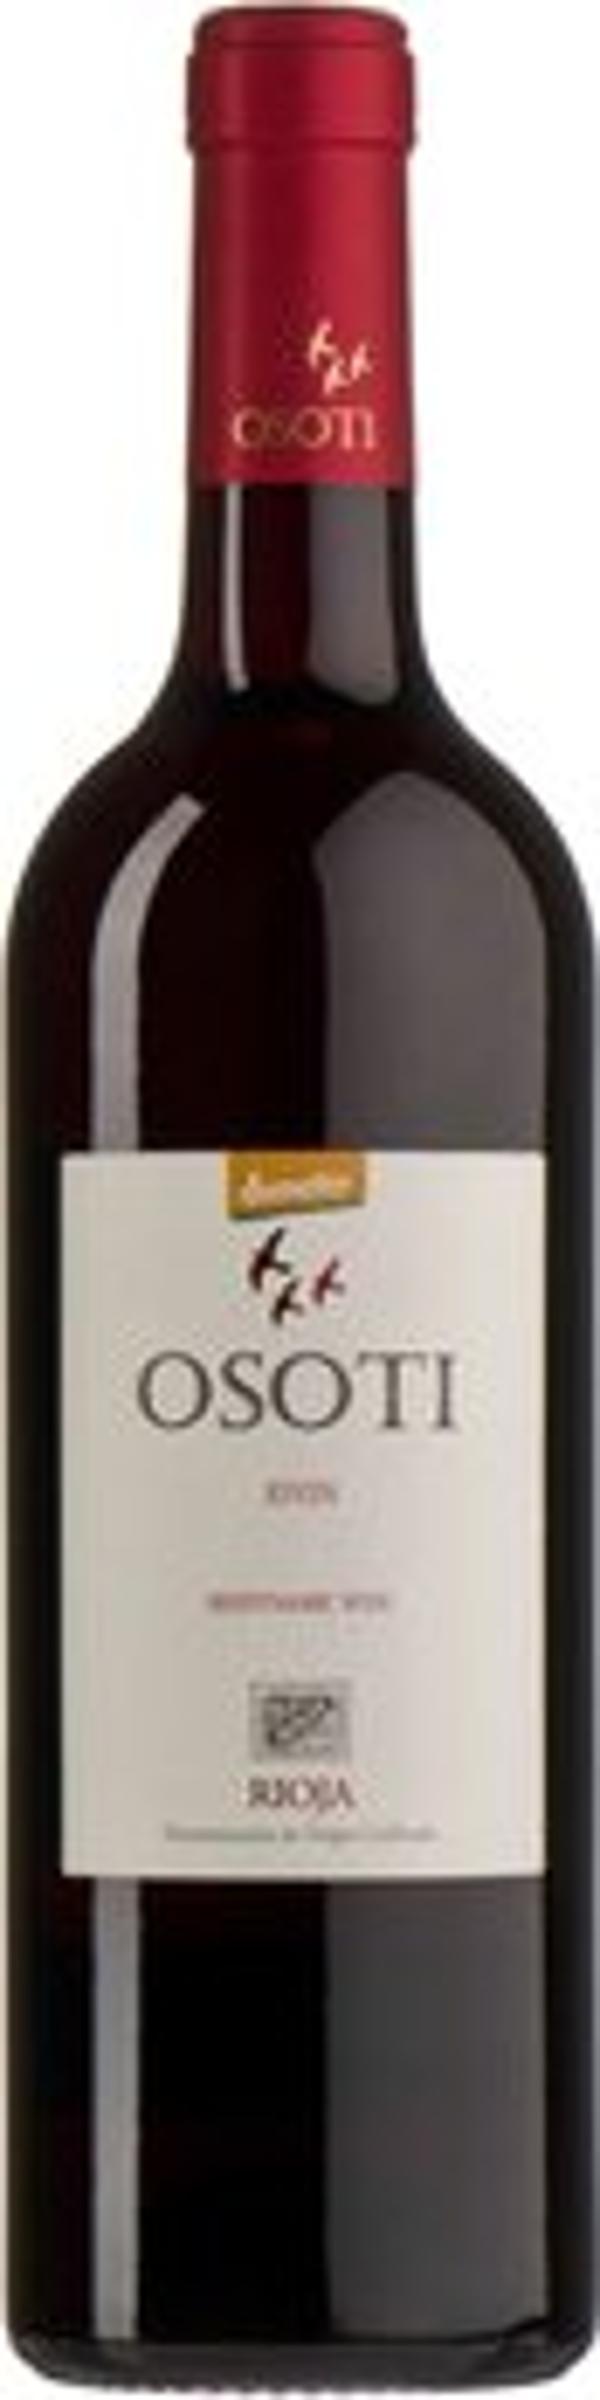 Produktfoto zu Osoti Rioja Joven